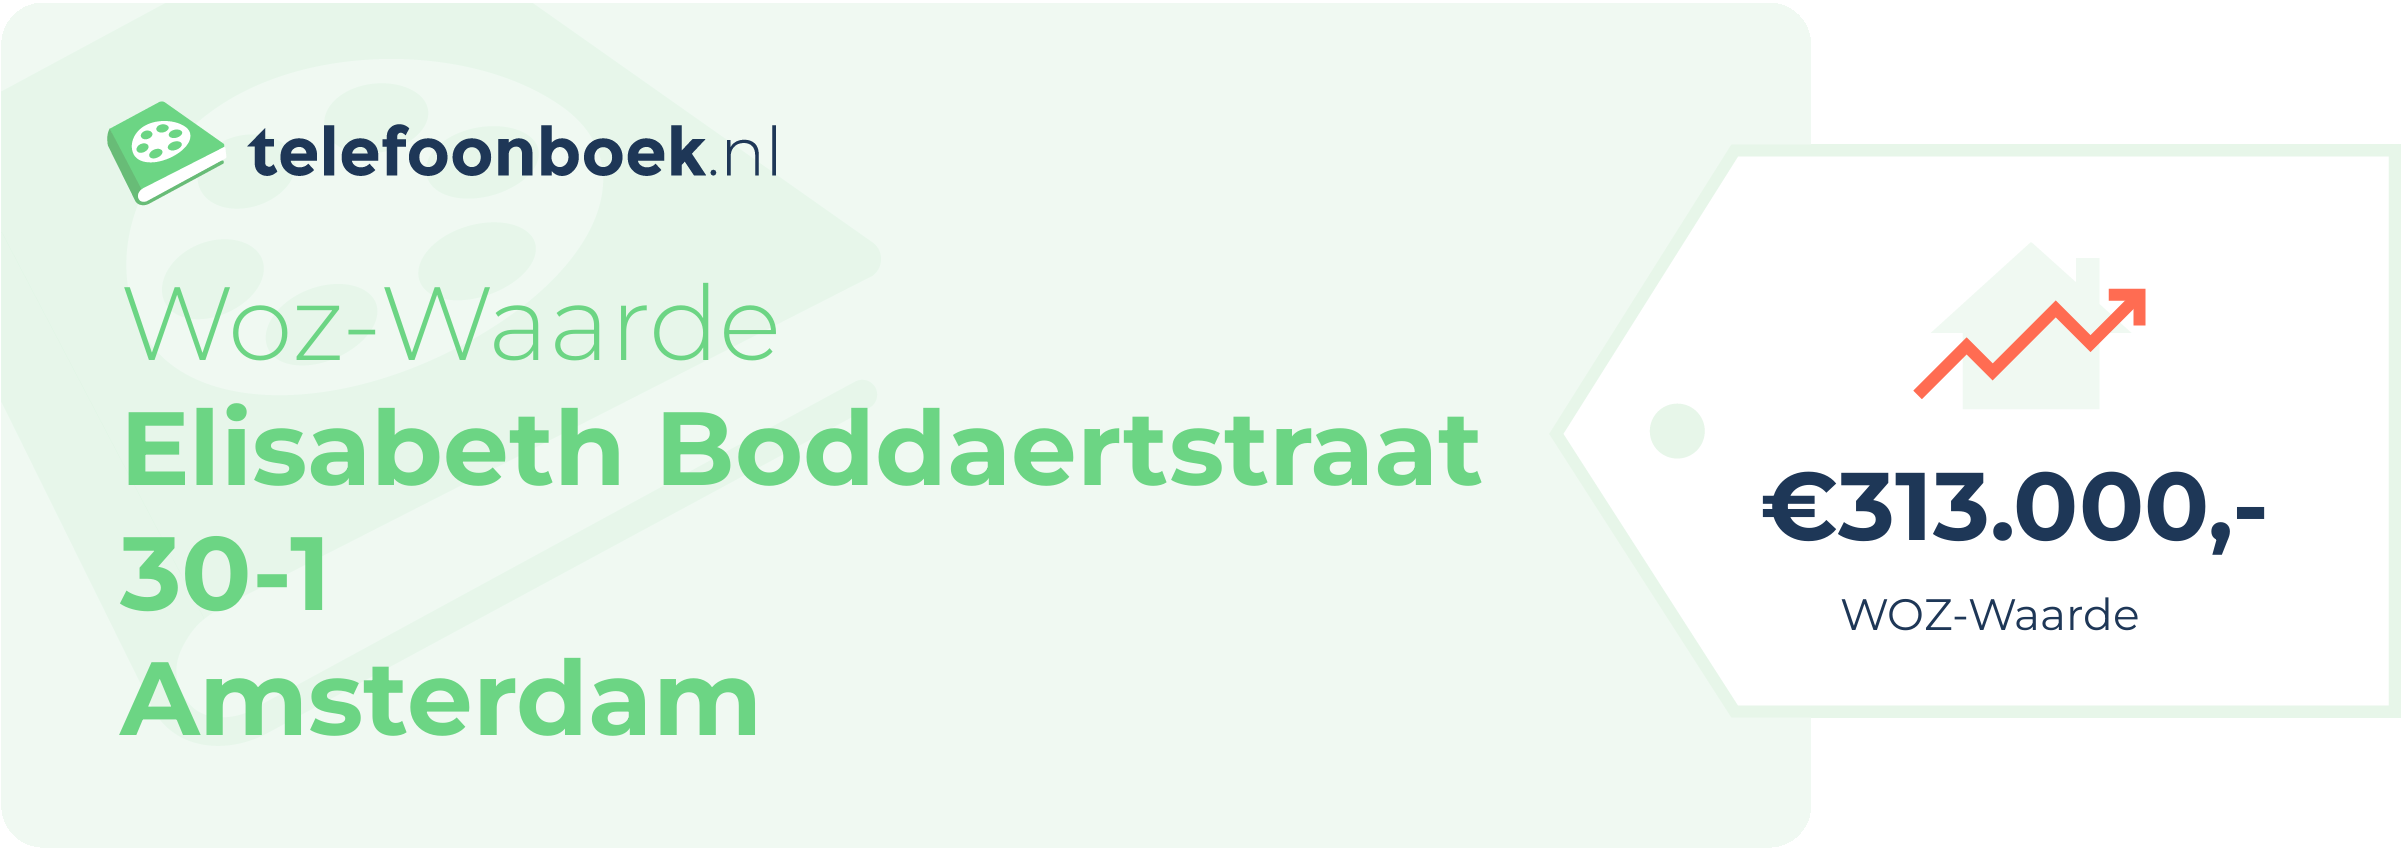 WOZ-waarde Elisabeth Boddaertstraat 30-1 Amsterdam